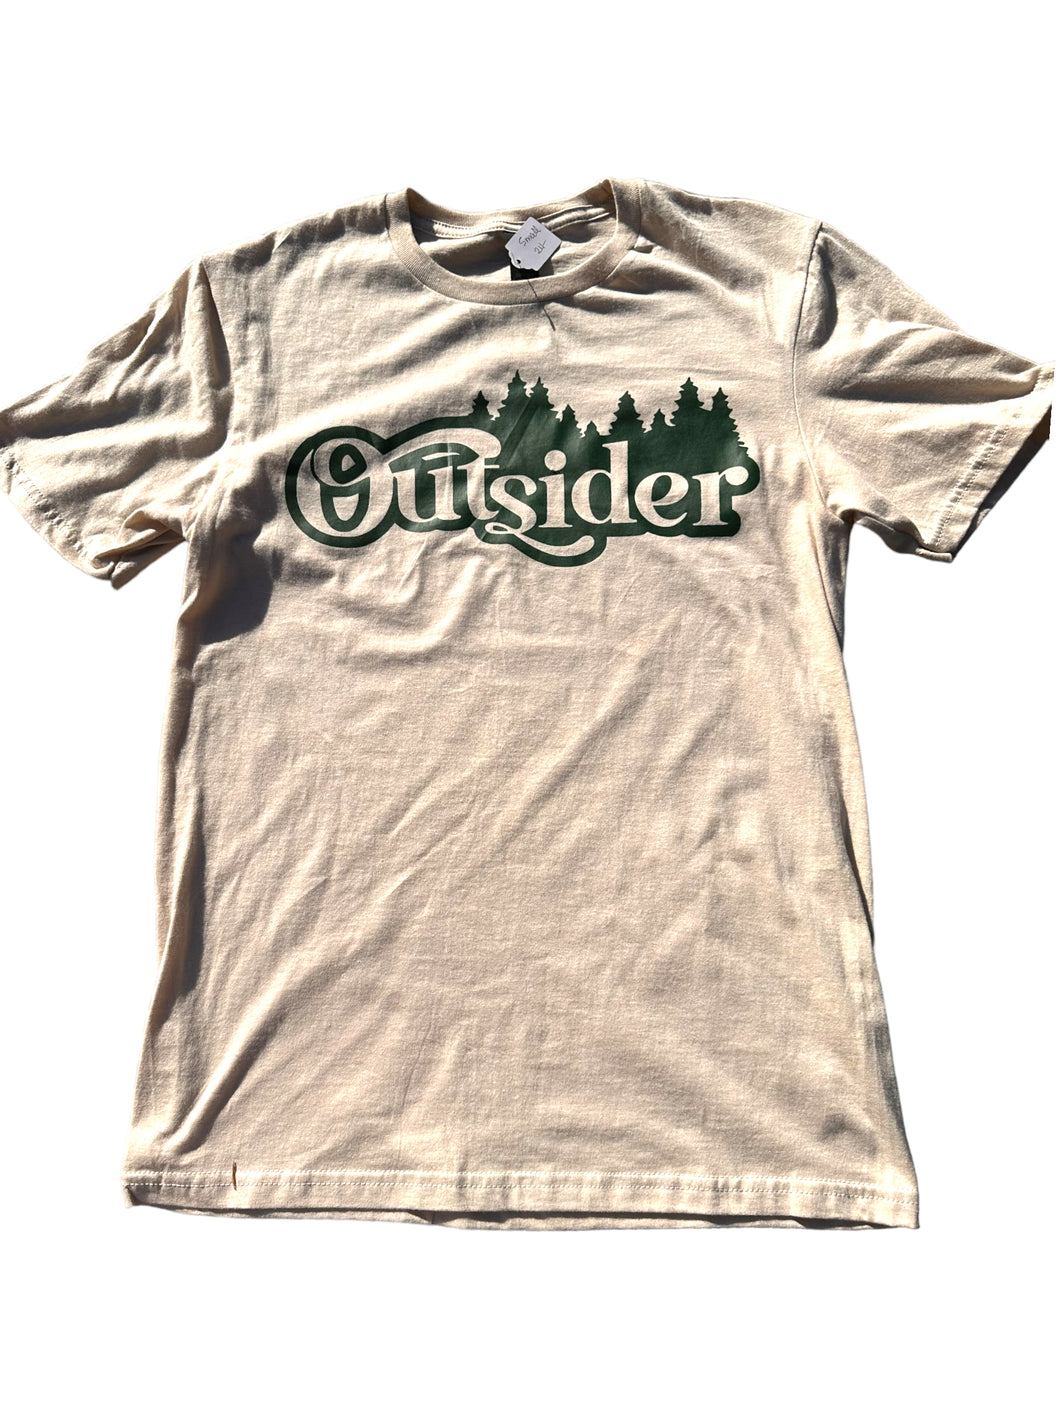 Unisex Outsider Camping Short-Sleeve T-Shirt